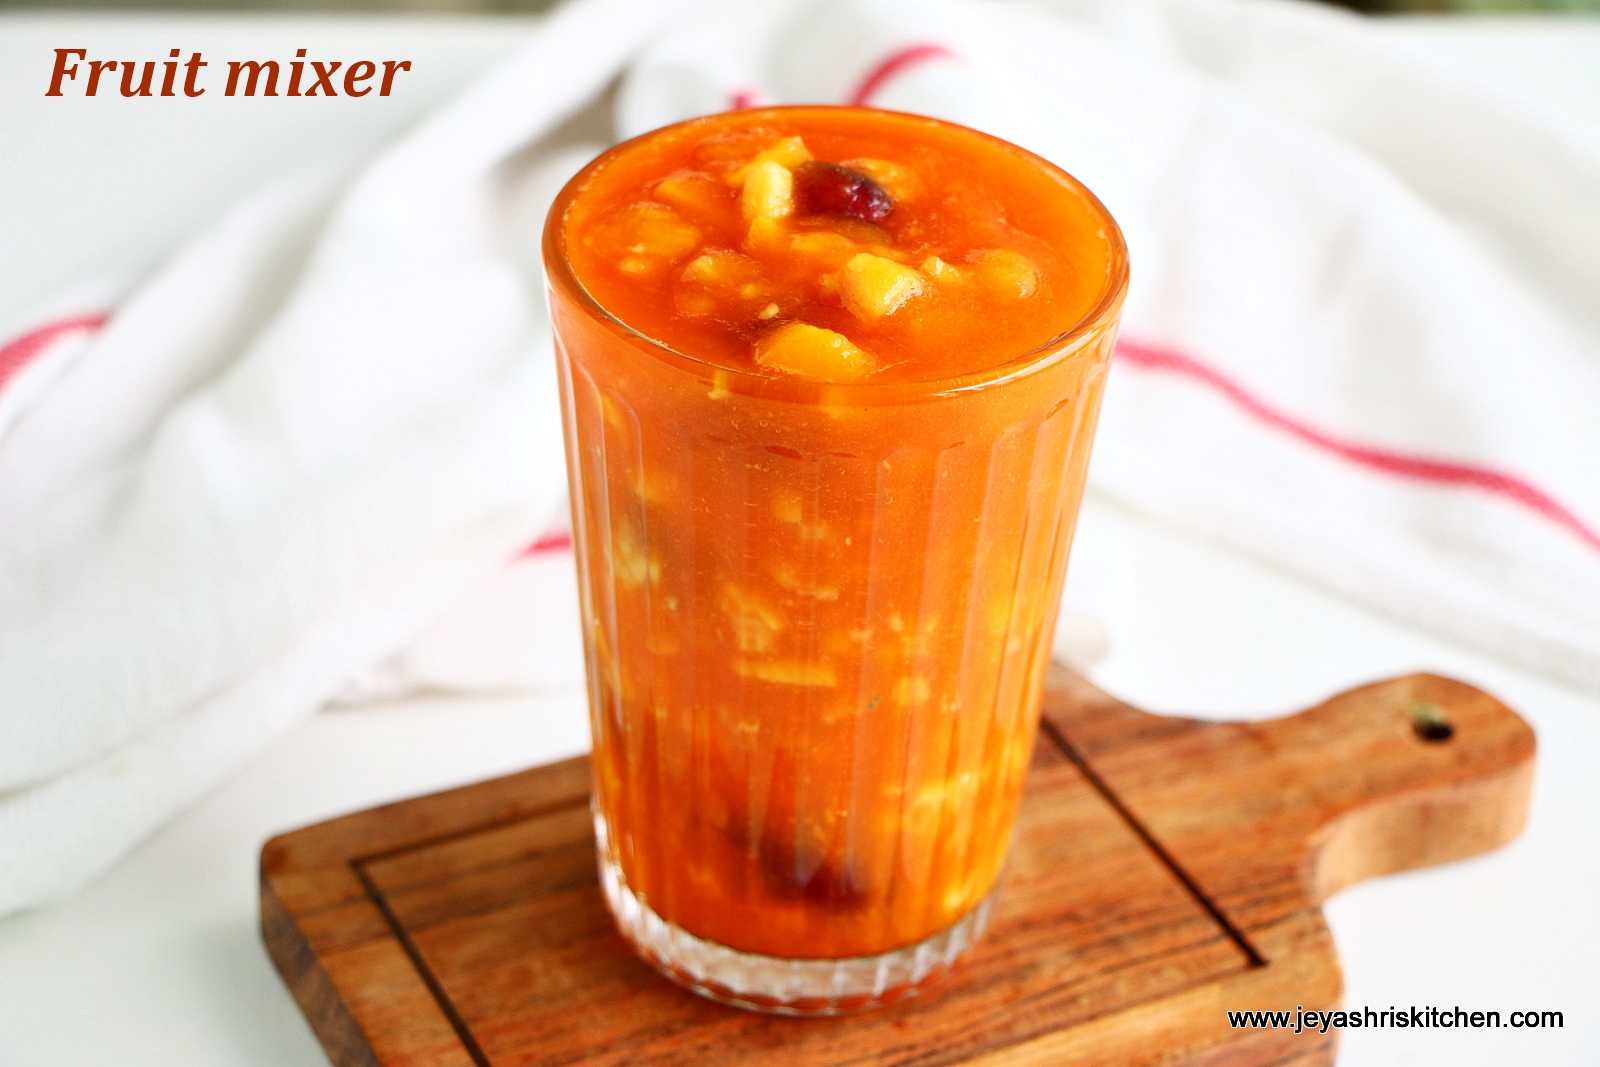 Madurai-style fruit mixer recipe - Jeyashri's Kitchen